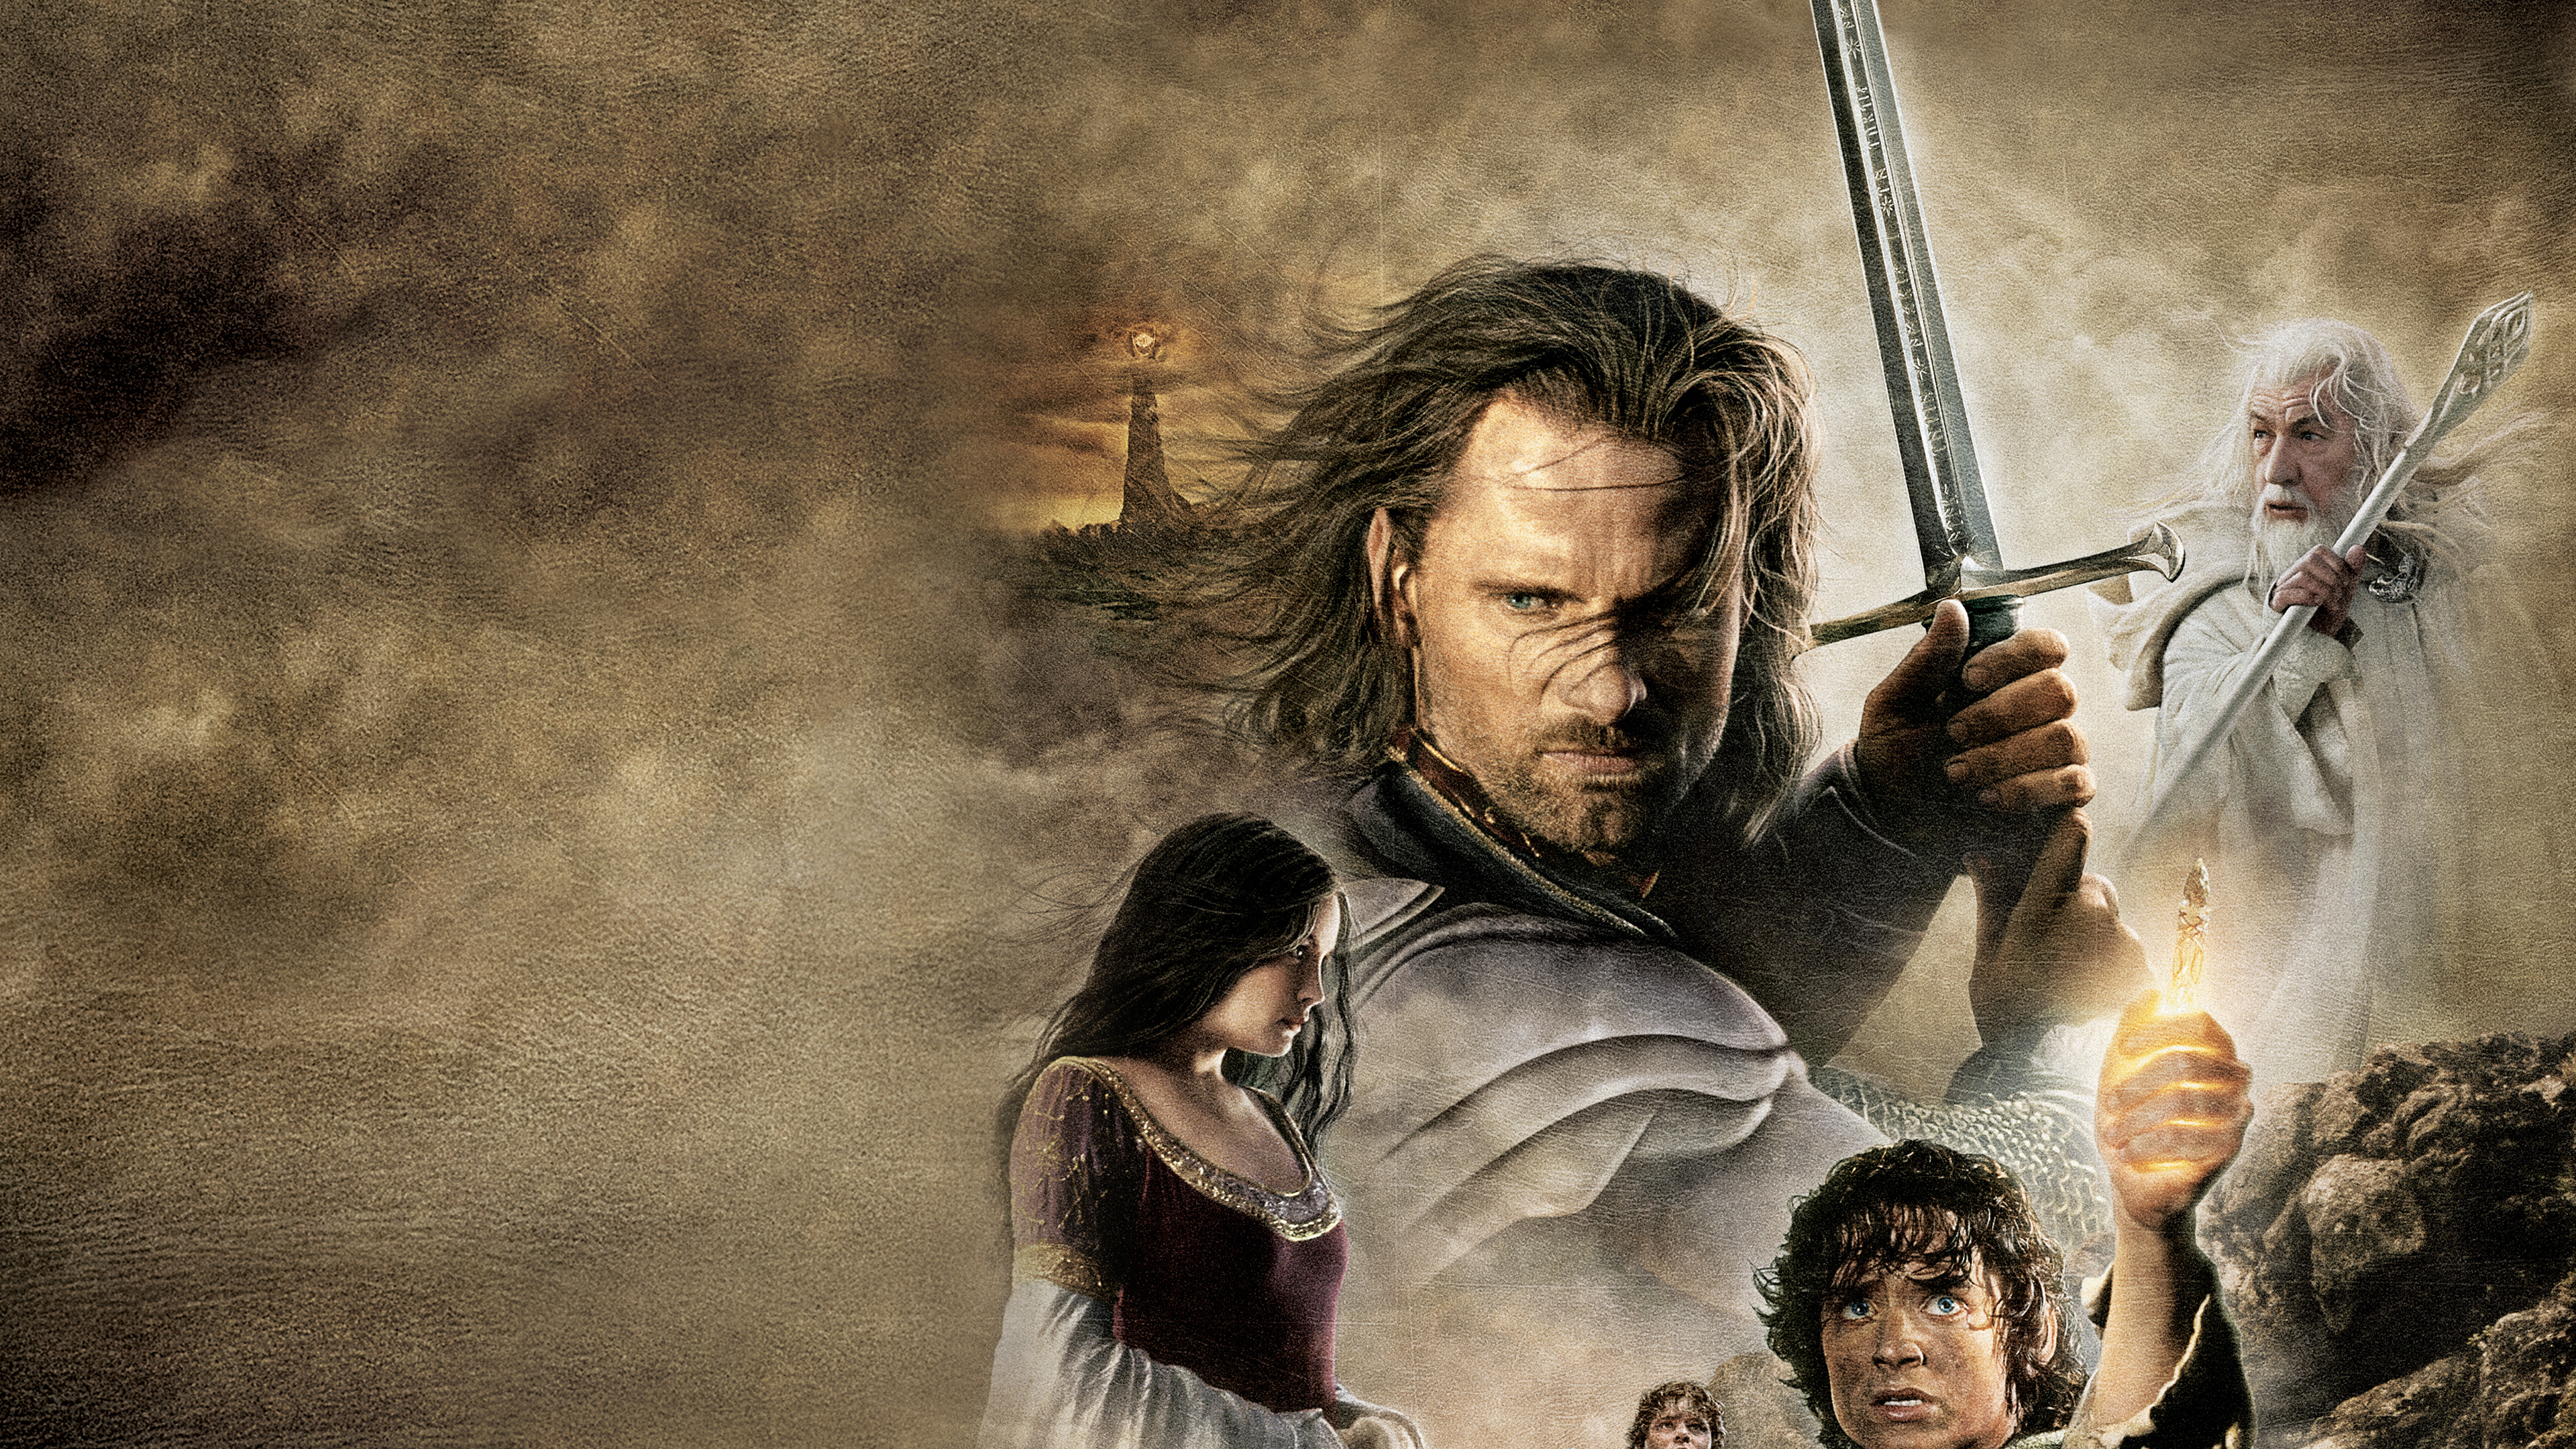 Aragorn, 4K wallpaper, Heroic king, Middle-earth warrior, 3840x2160 4K Desktop